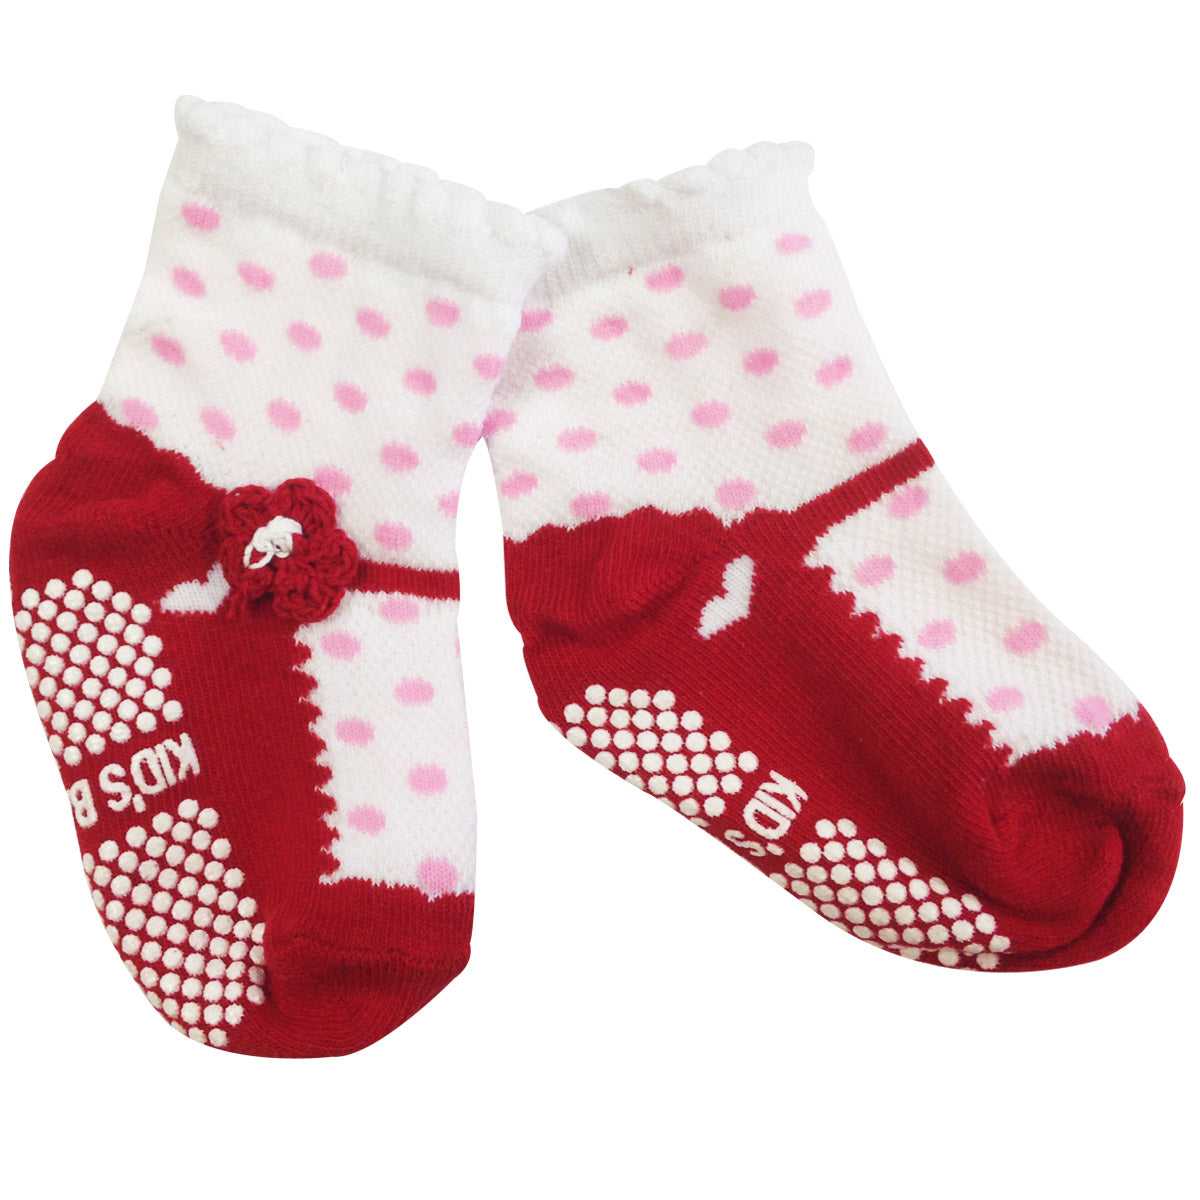 Wrapables Non-slip Mary Jane Mesh Socks for Baby (Set of 4)